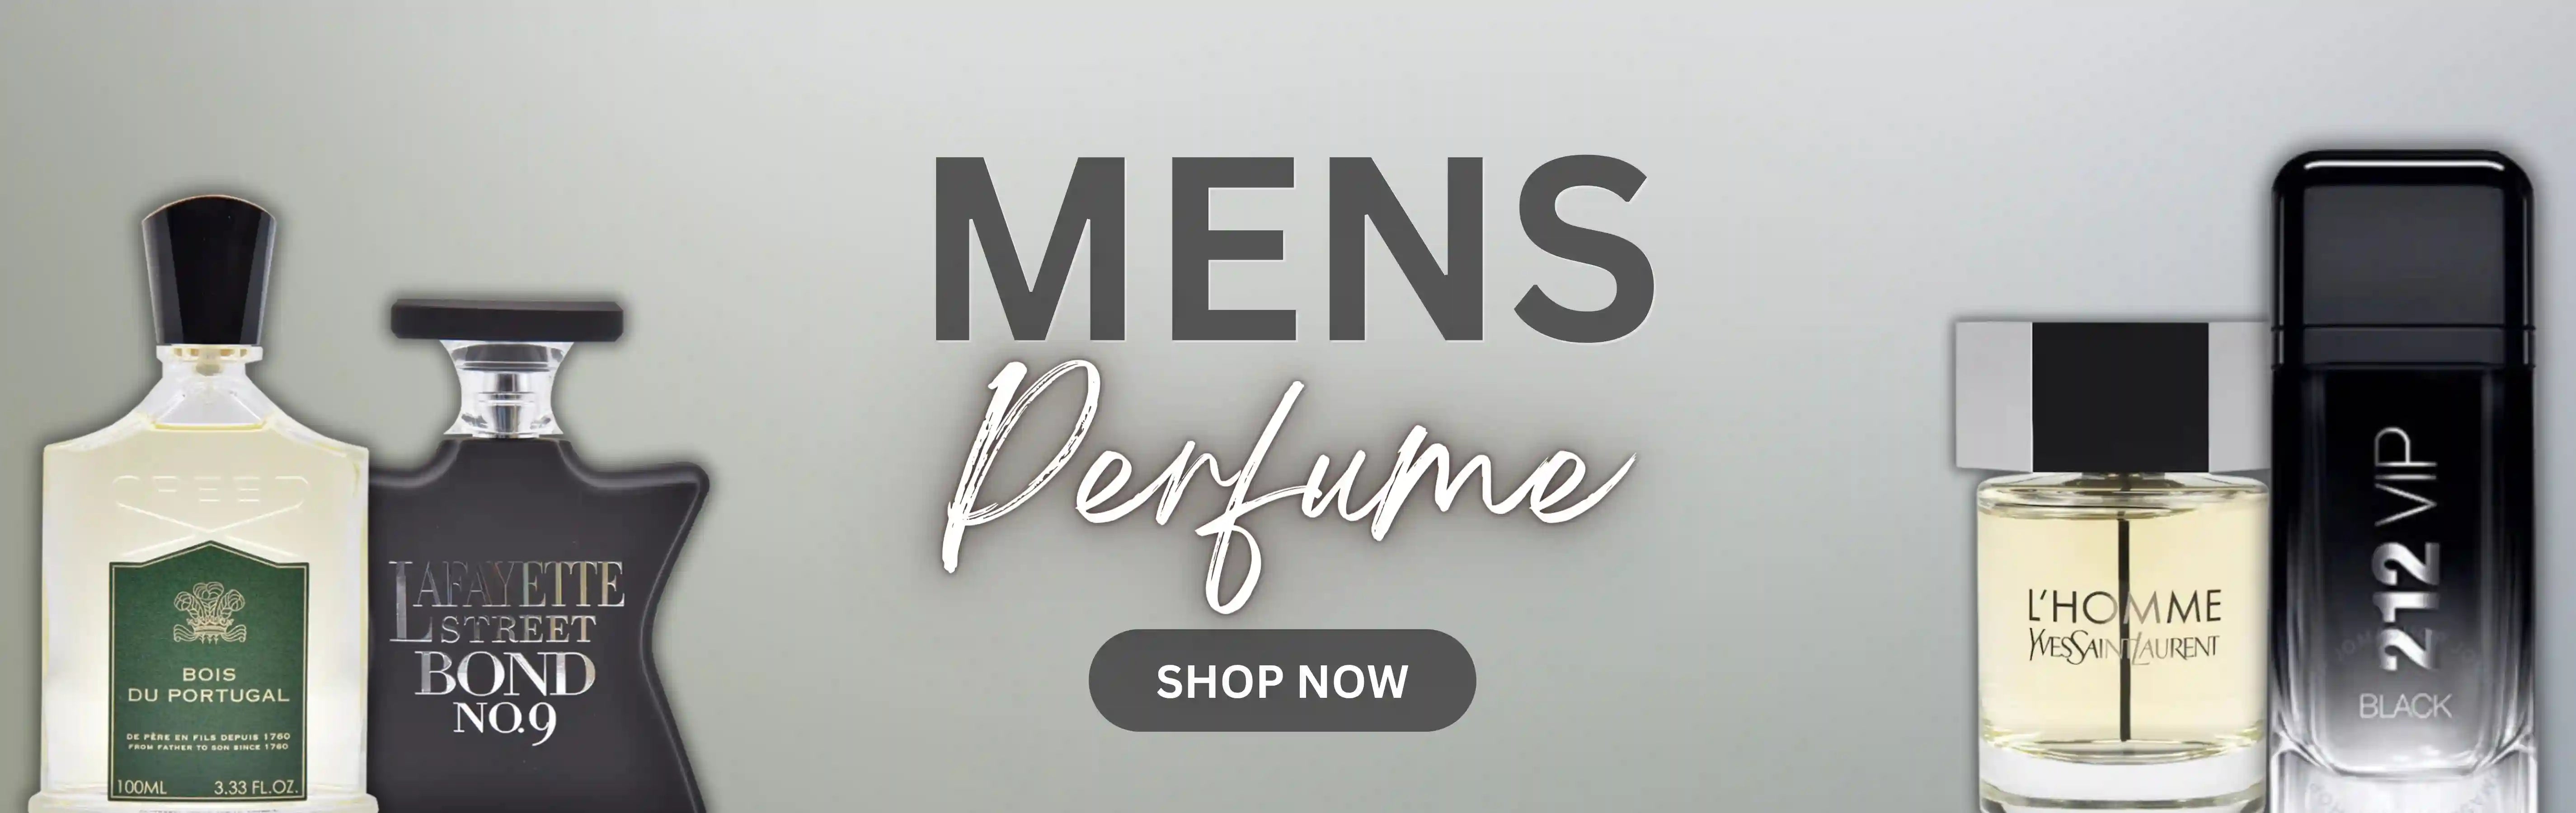 Mens Perfume, Mens Fragrances, Best Men Perfume Stores in US, Get your men fragrance now